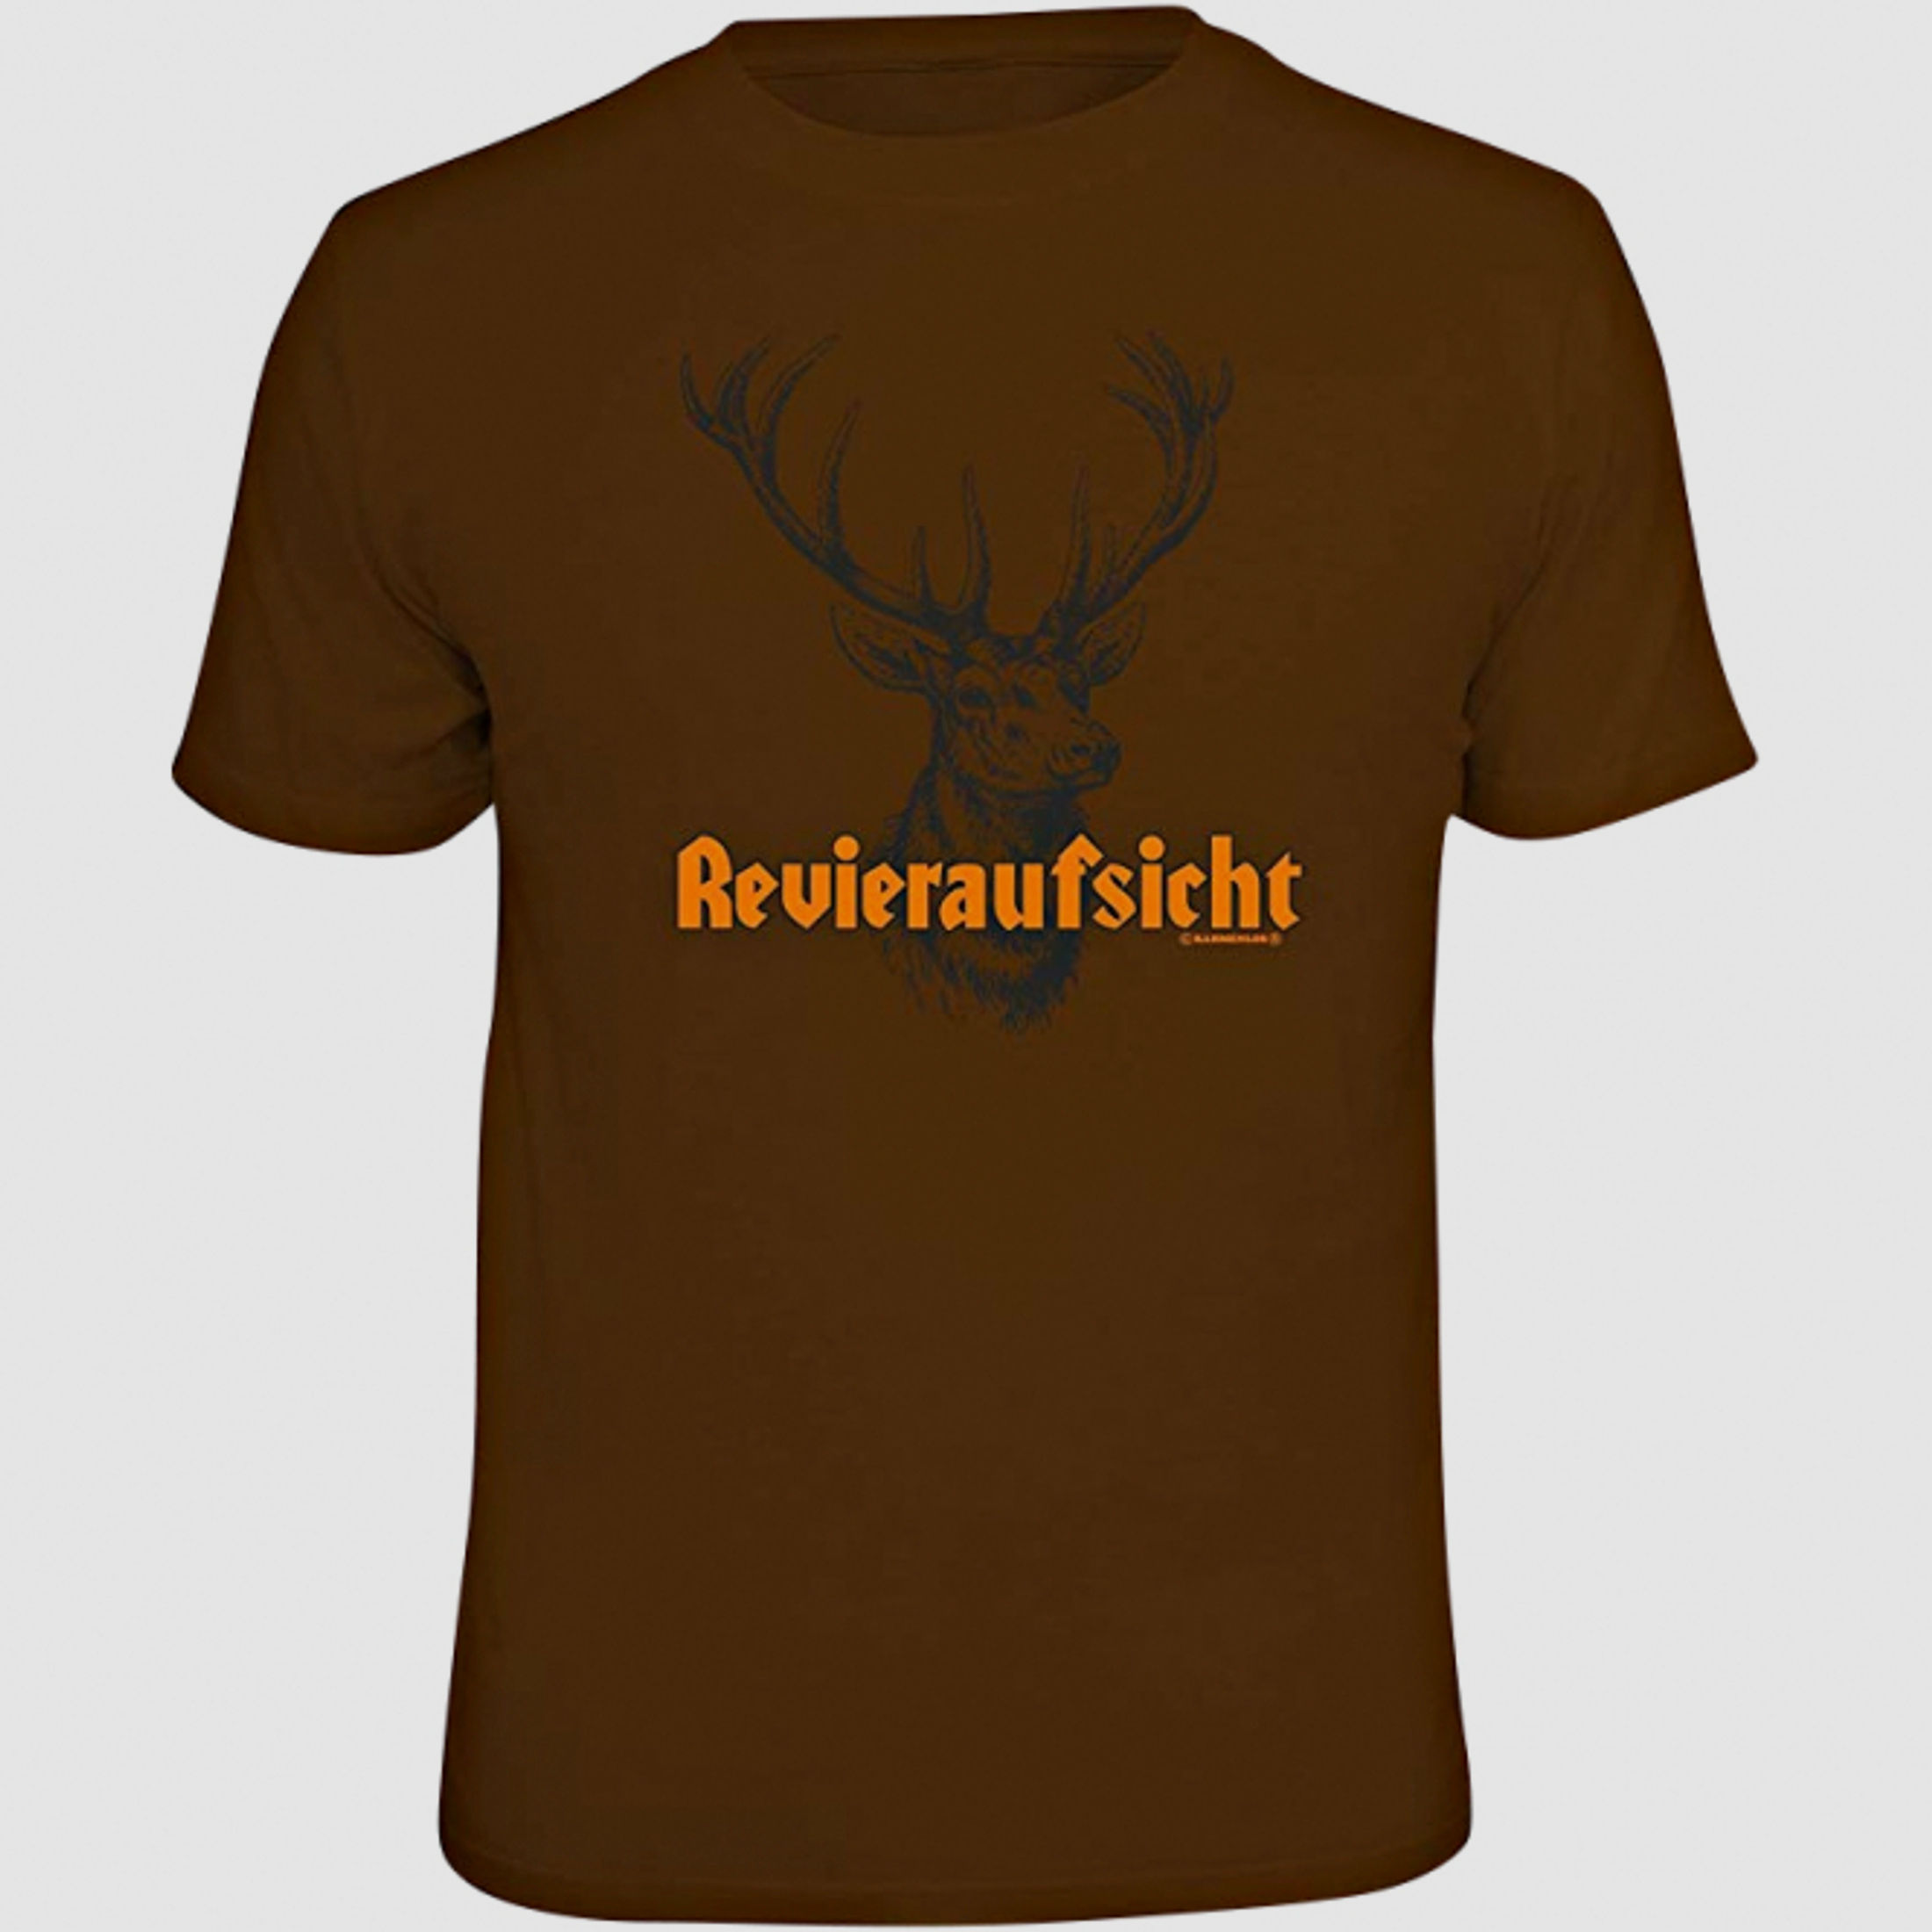 Rahmenlos       Rahmenlos   Herren T-Shirt "Revieraufsicht"